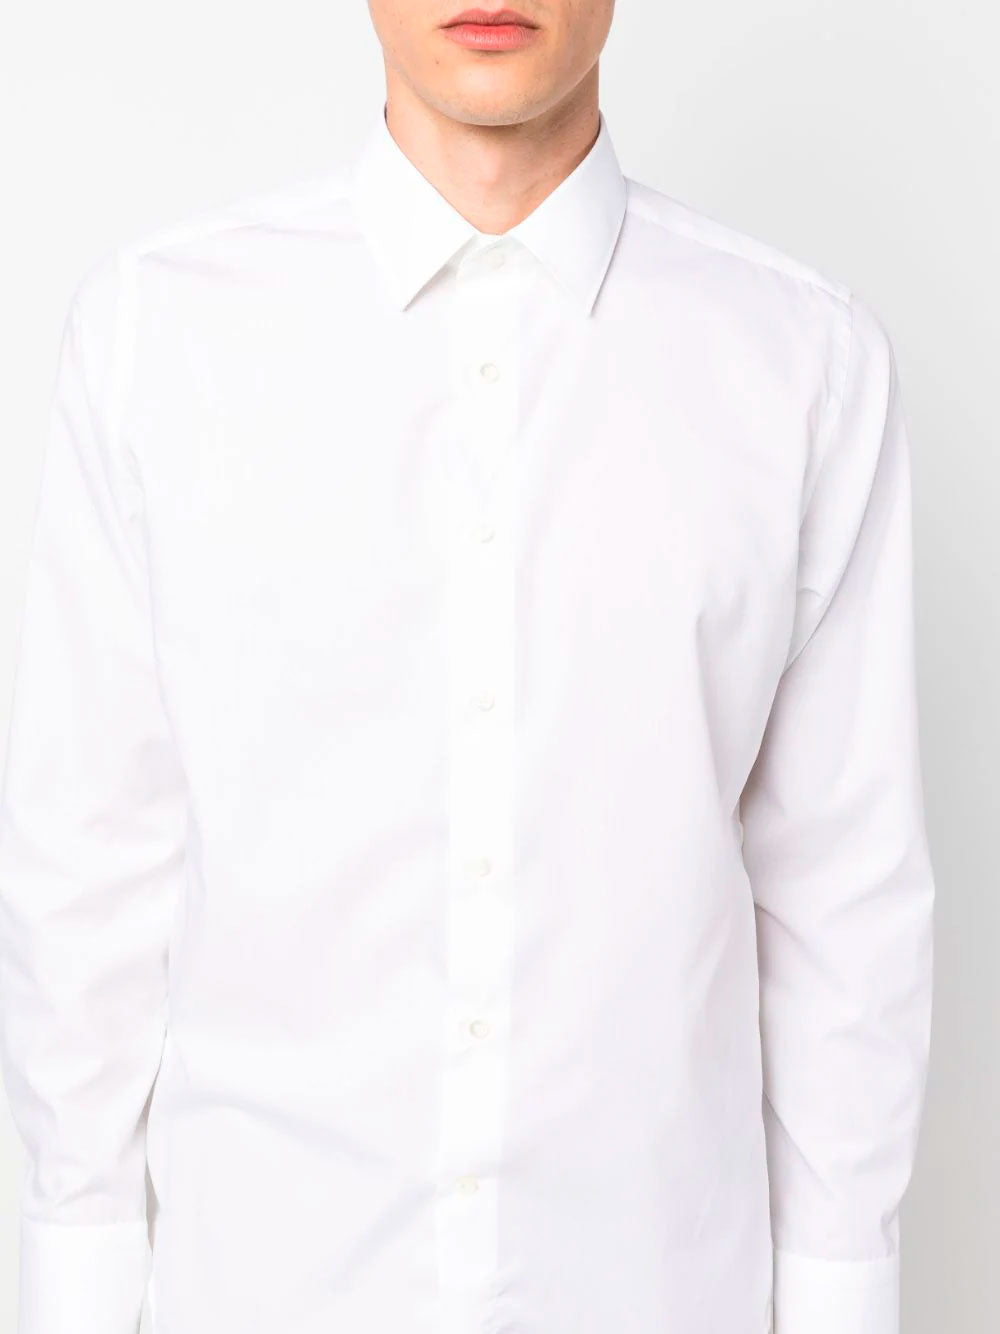 Long-sleeve cotton shirt